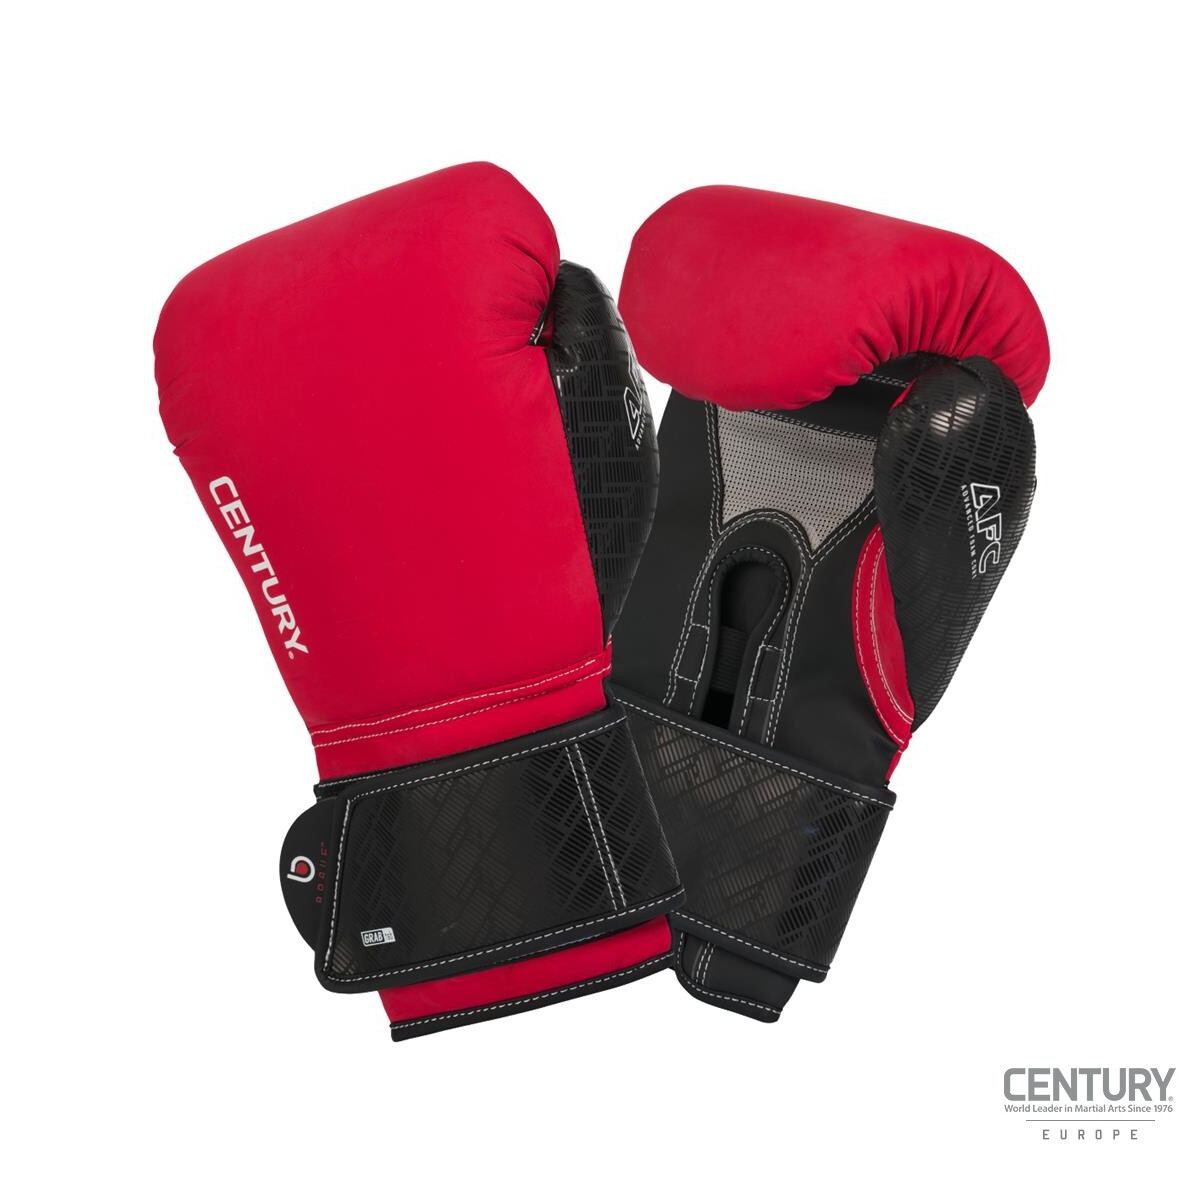 Brave Boxing Gloves 14oz Red/Black